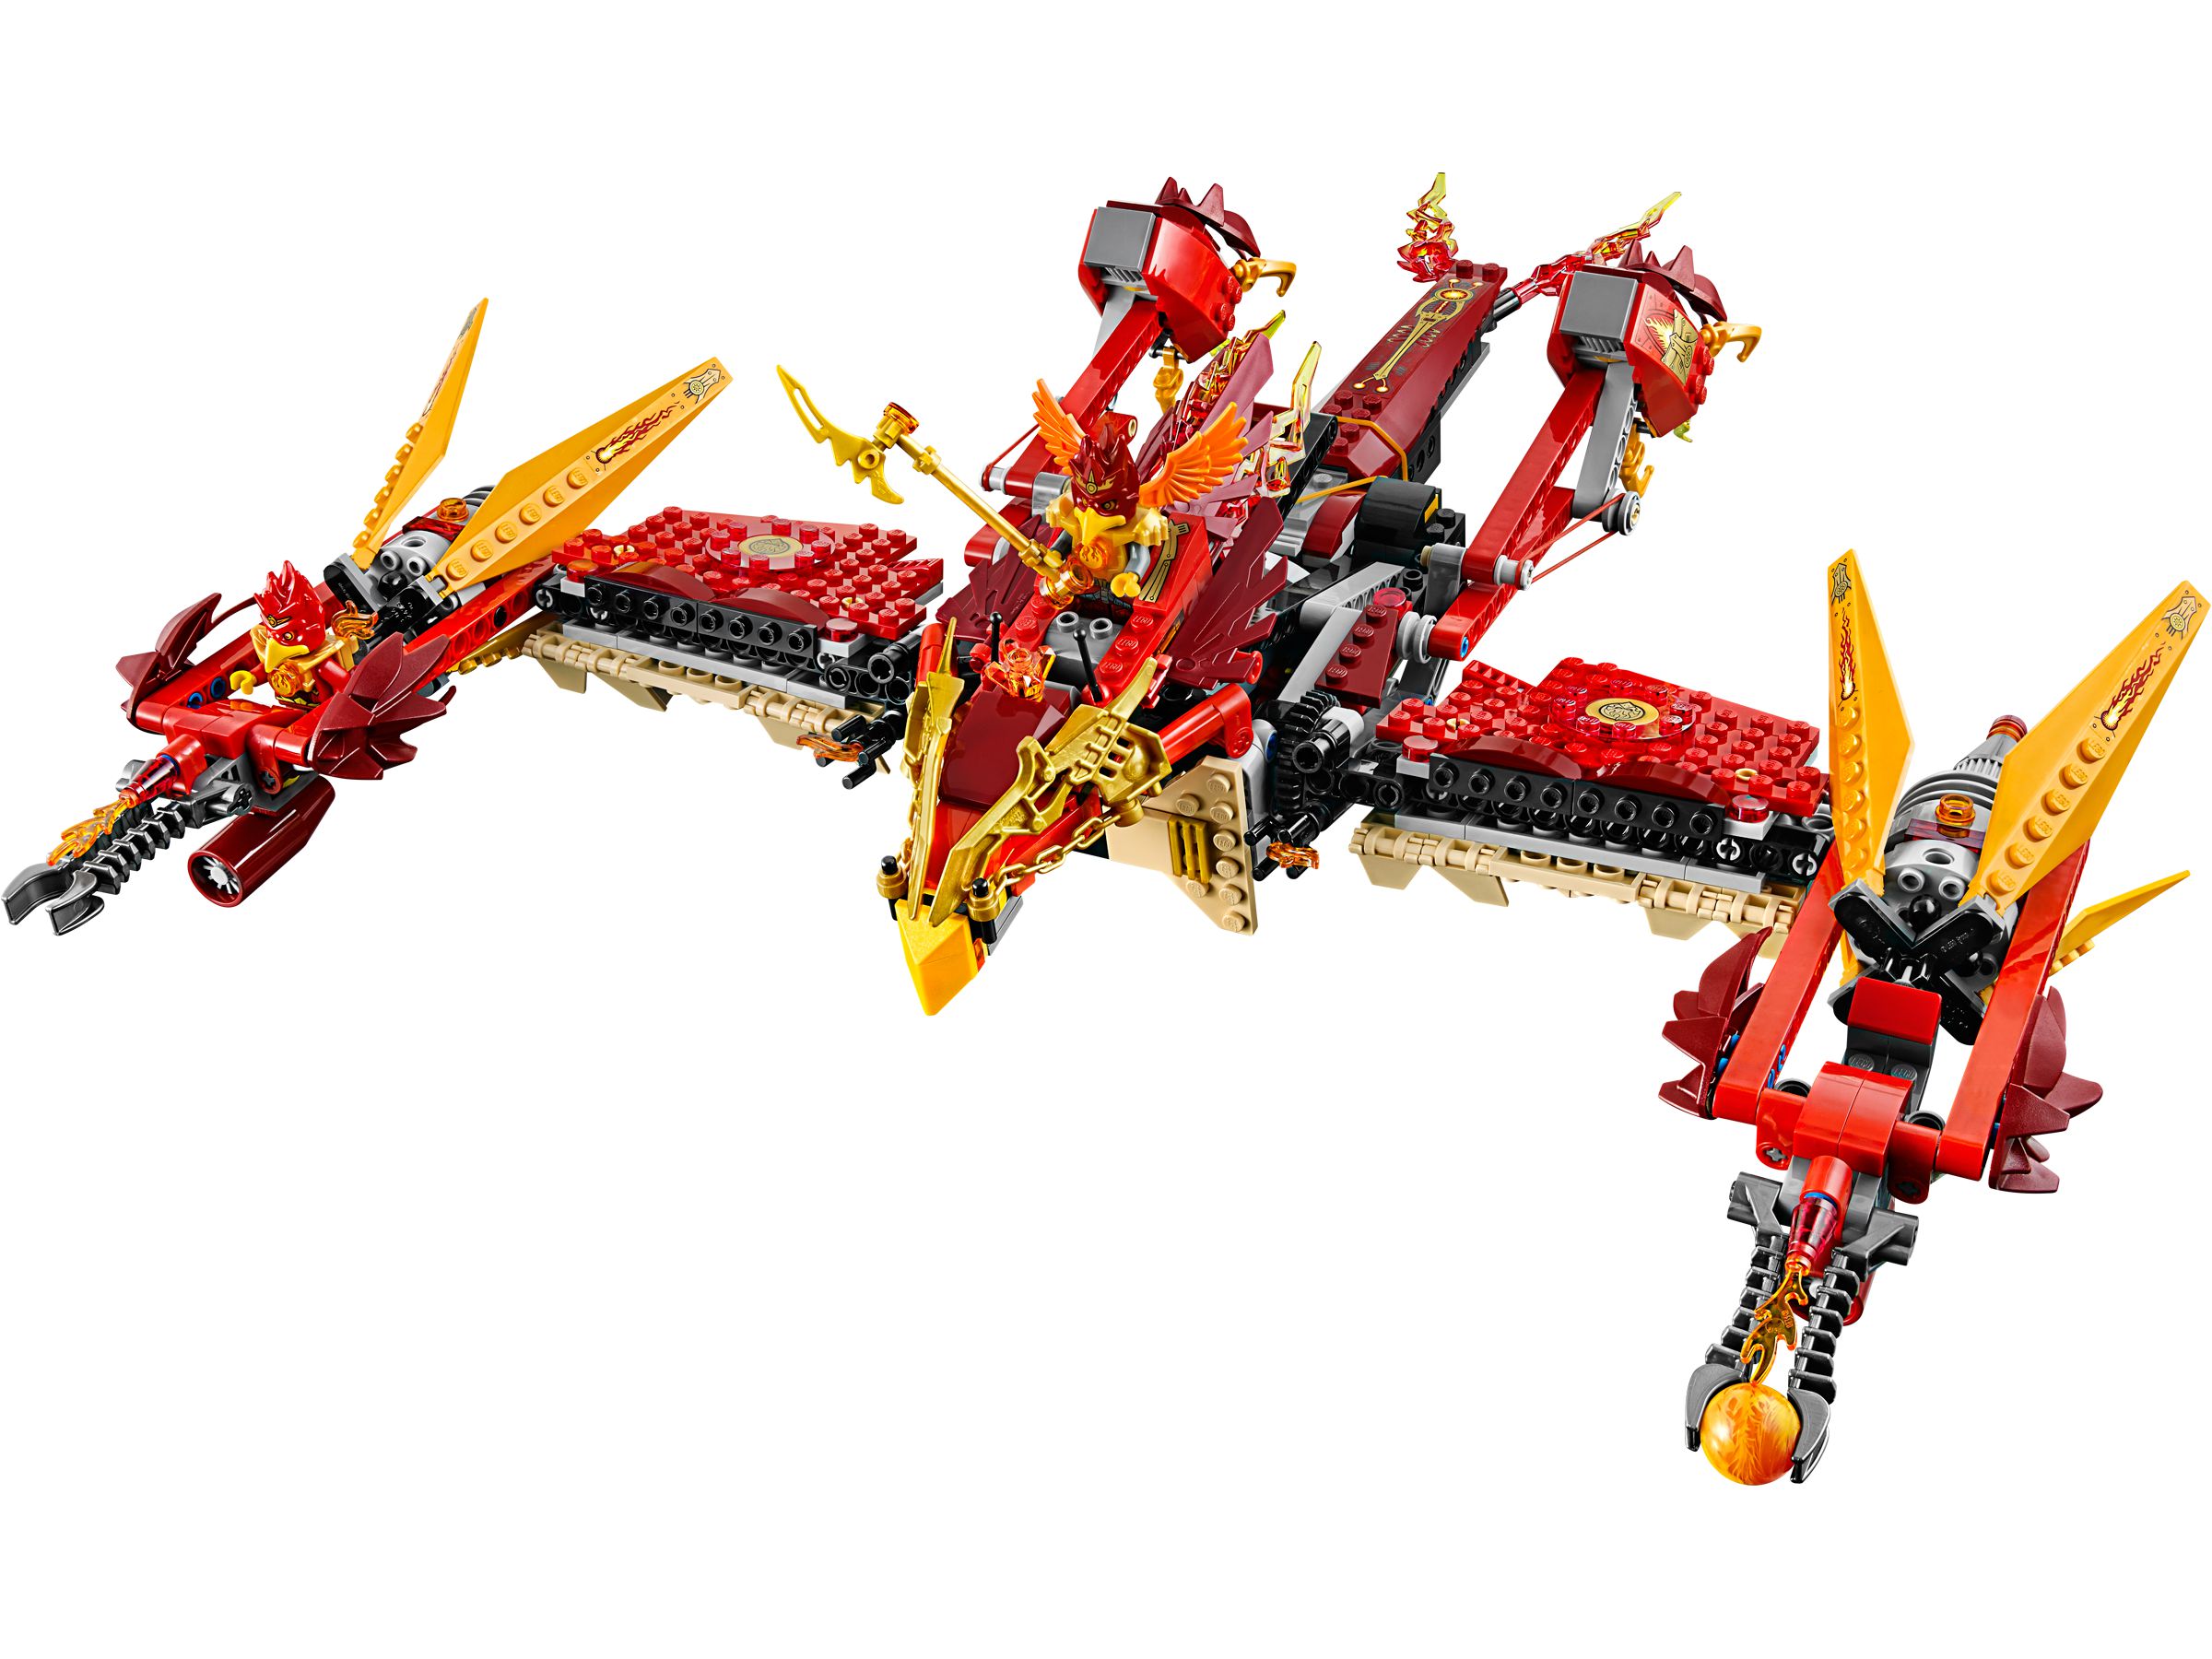 LEGO Legends Of Chima 70146 Phoenix Fliegender Feuertempel LEGO_70146_alt2.jpg